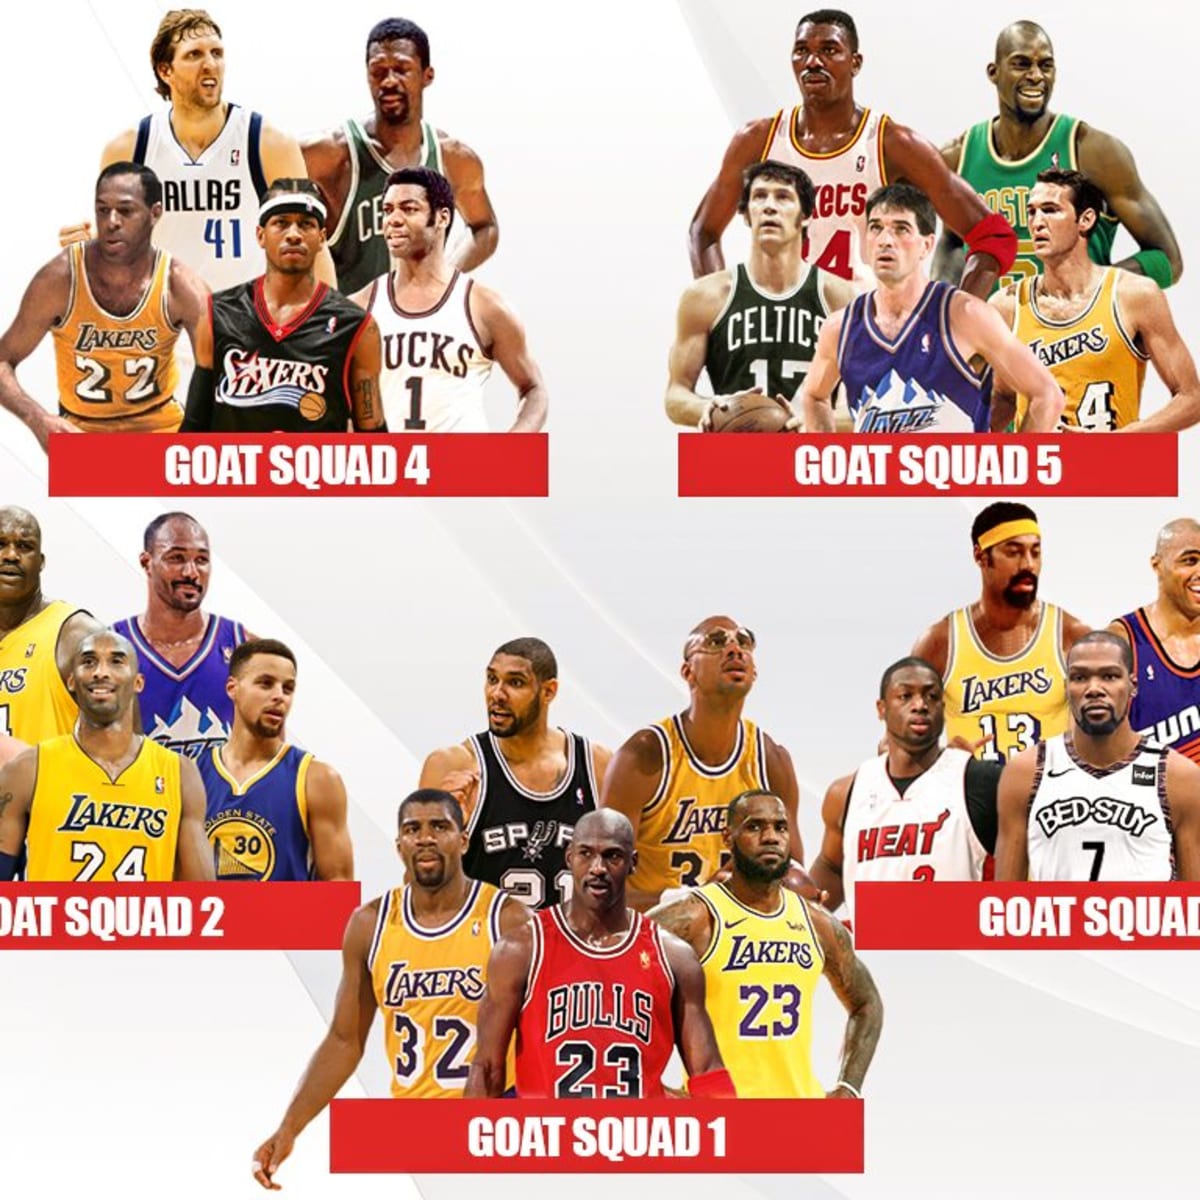 2023 Stephen Curry Michael Jordan Kobe Bryant Nba The Goat The Mamba The 3  Point King